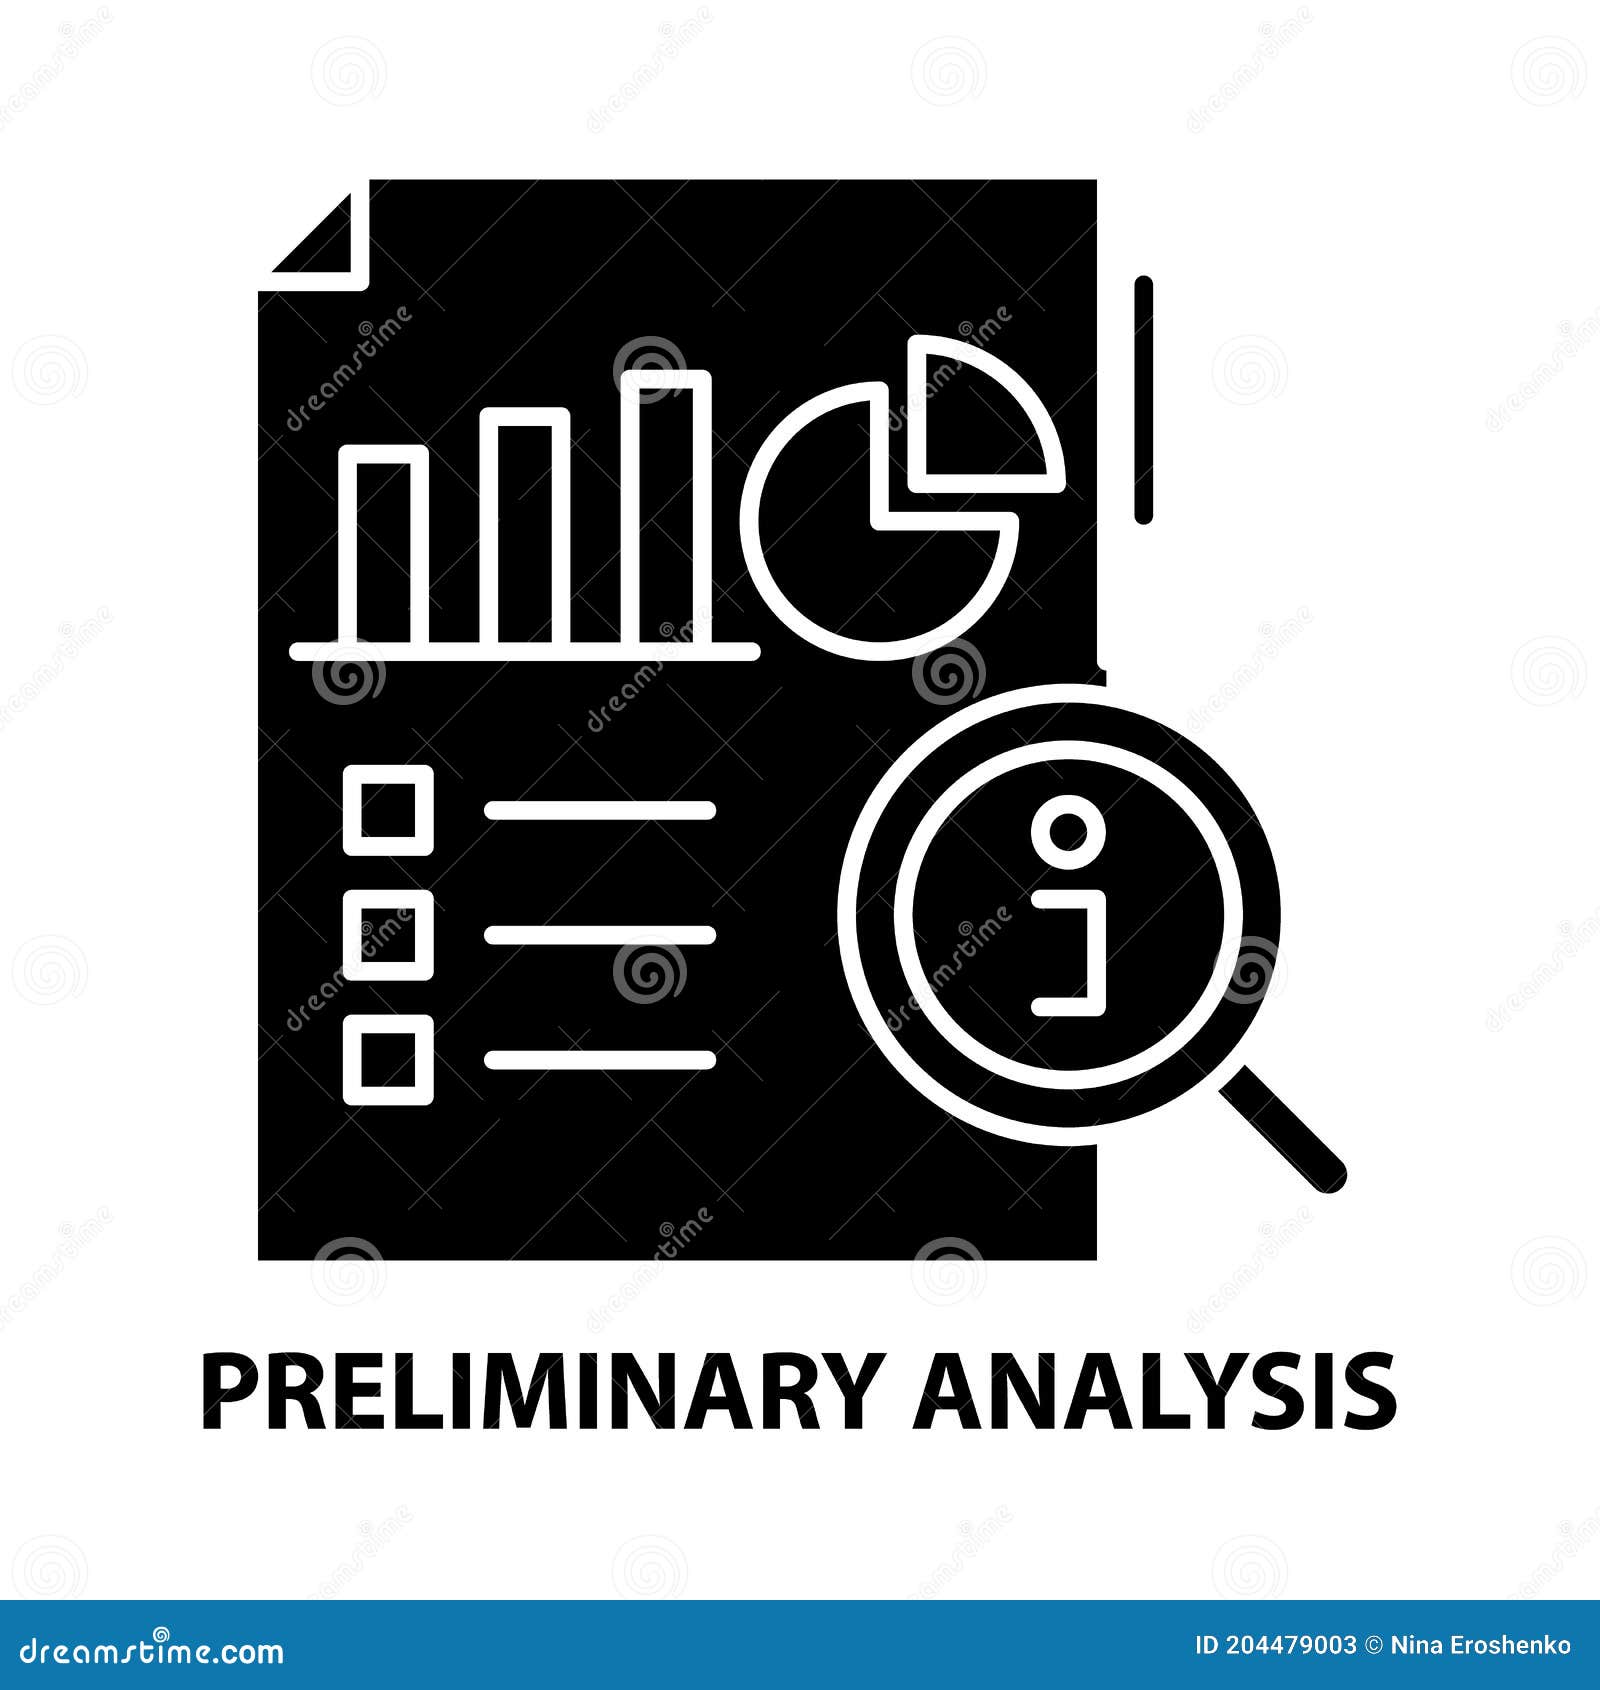 preliminary analysis icon, black  sign with editable strokes, concept 